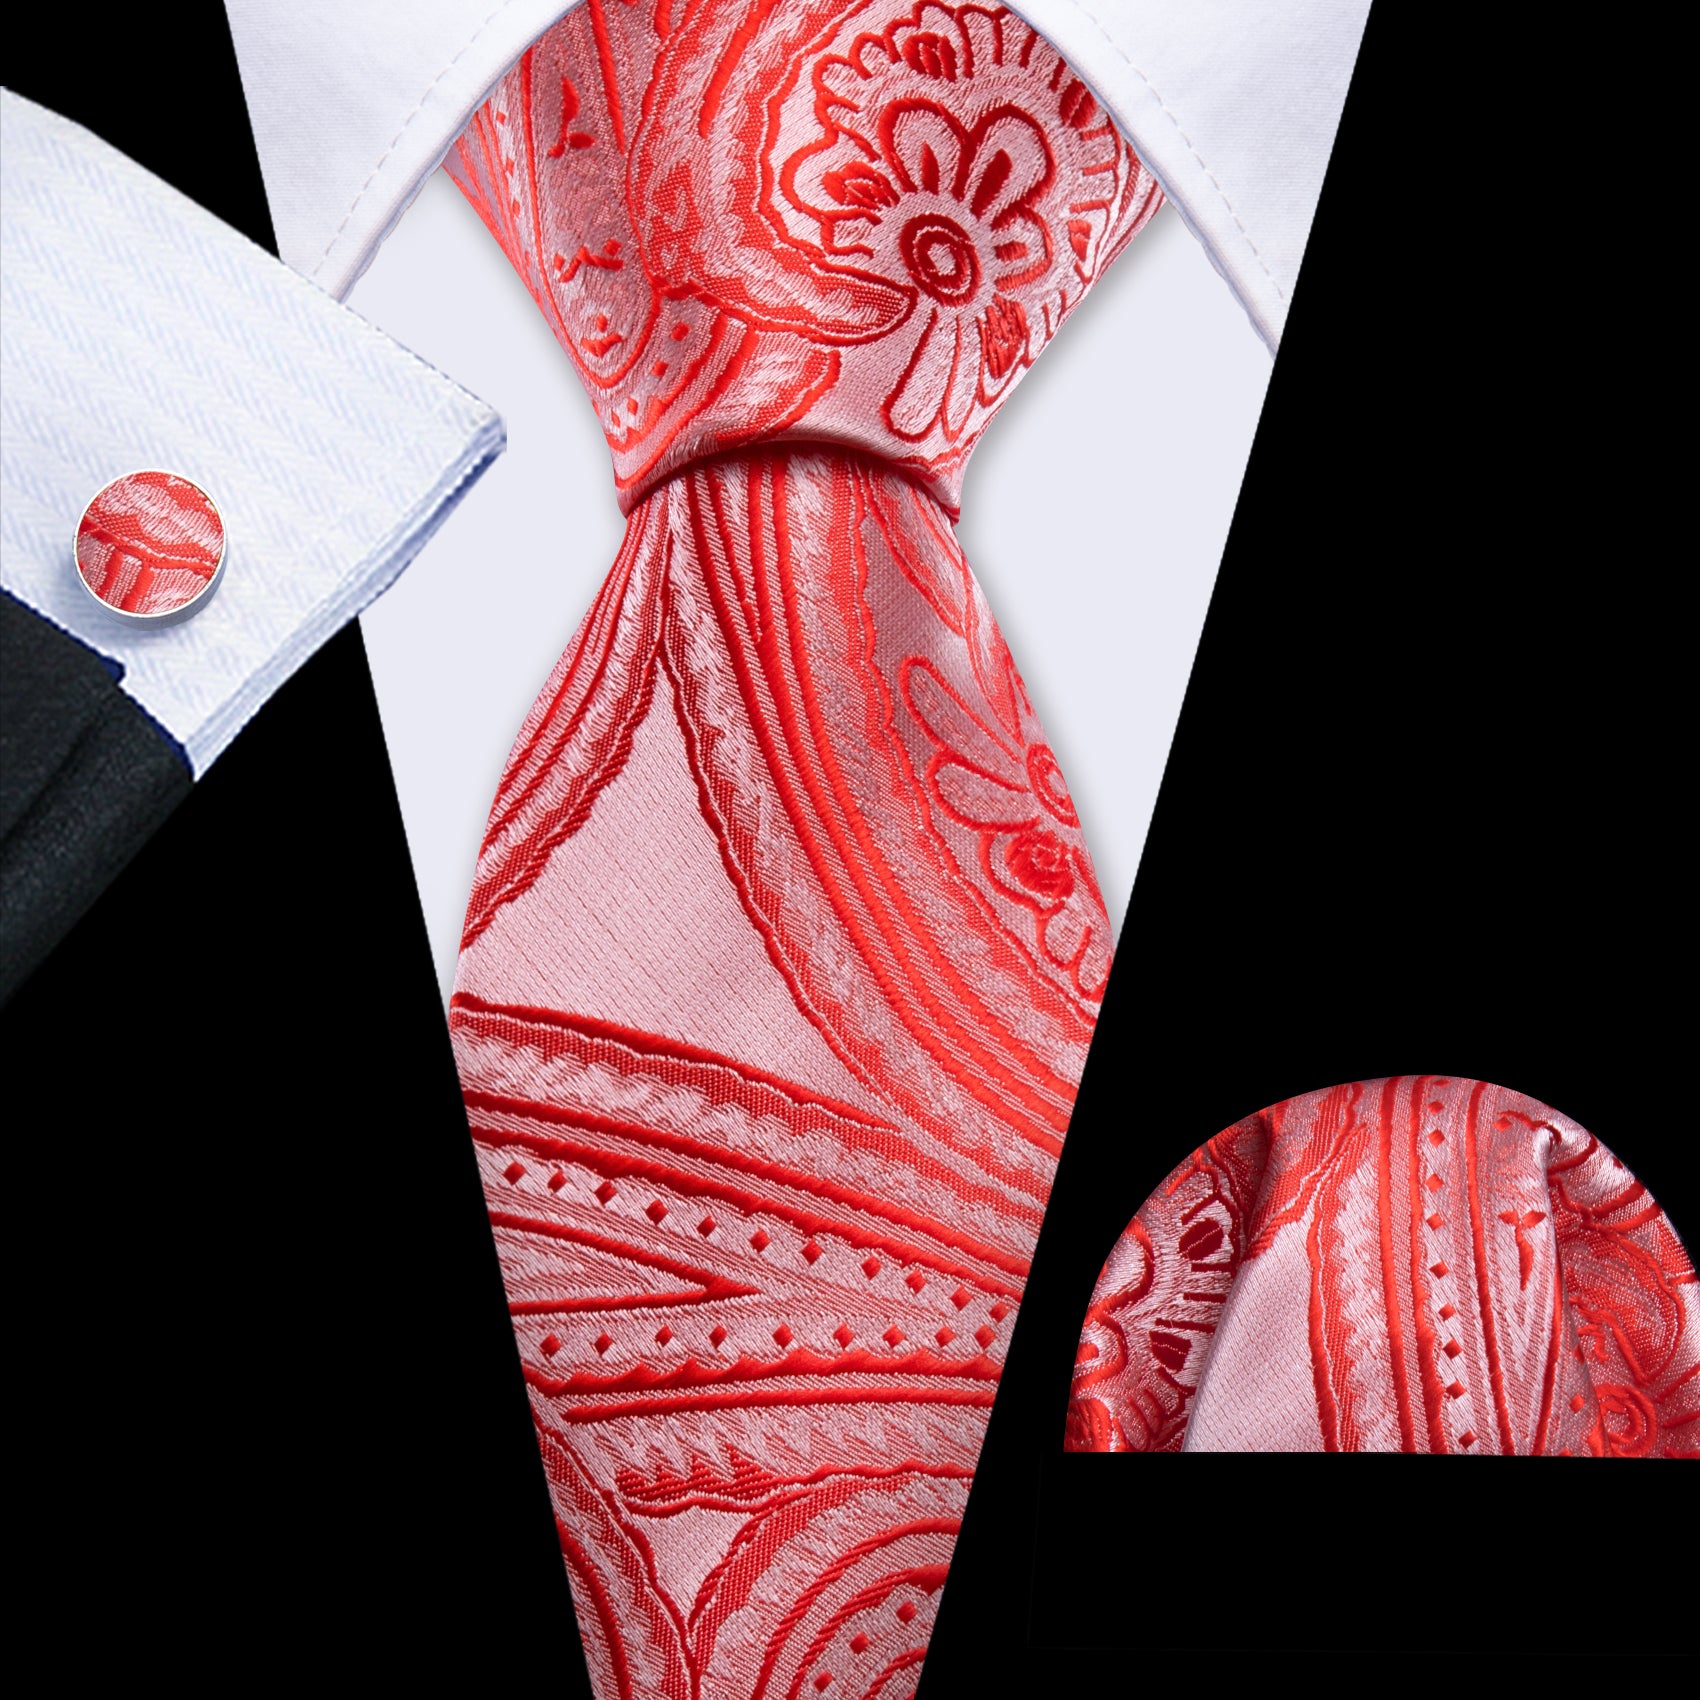 Red Paisley Silk Tie Handkerchief Cufflinks Set